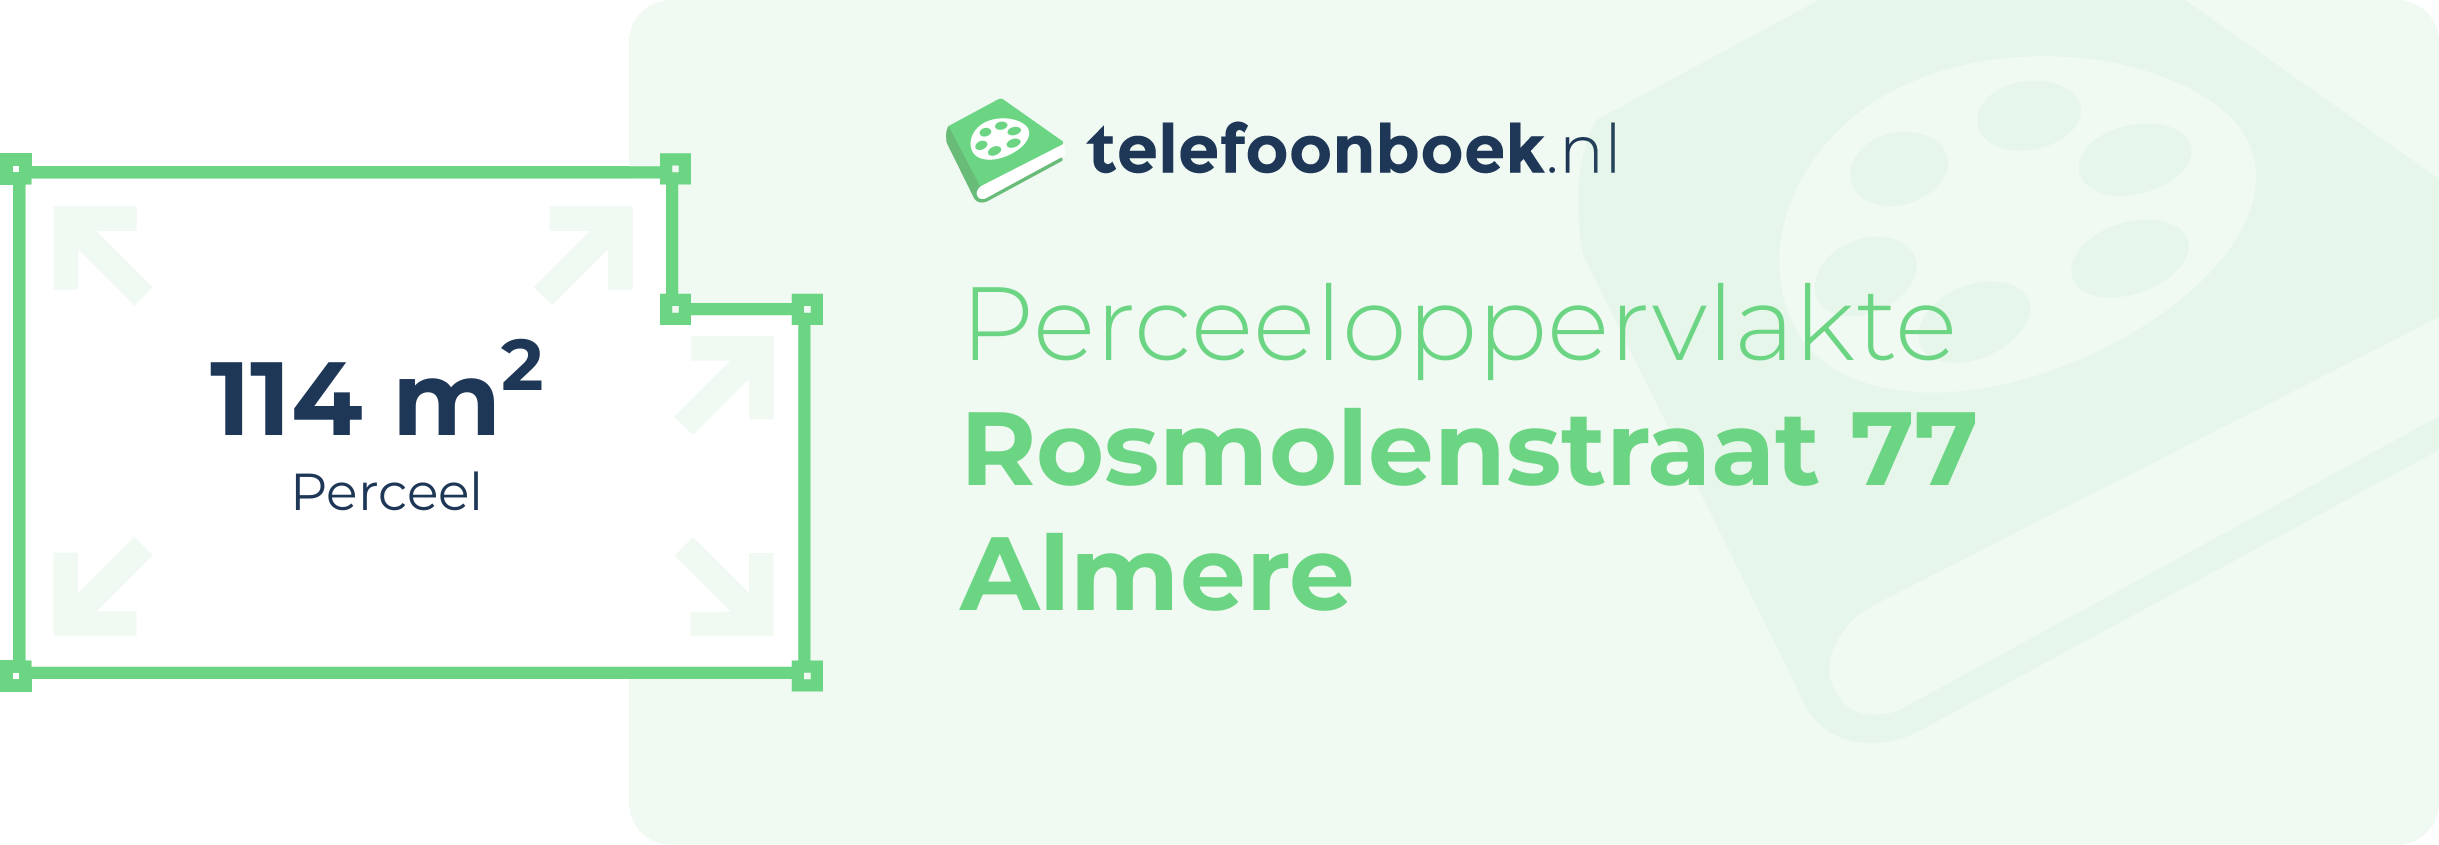 Perceeloppervlakte Rosmolenstraat 77 Almere